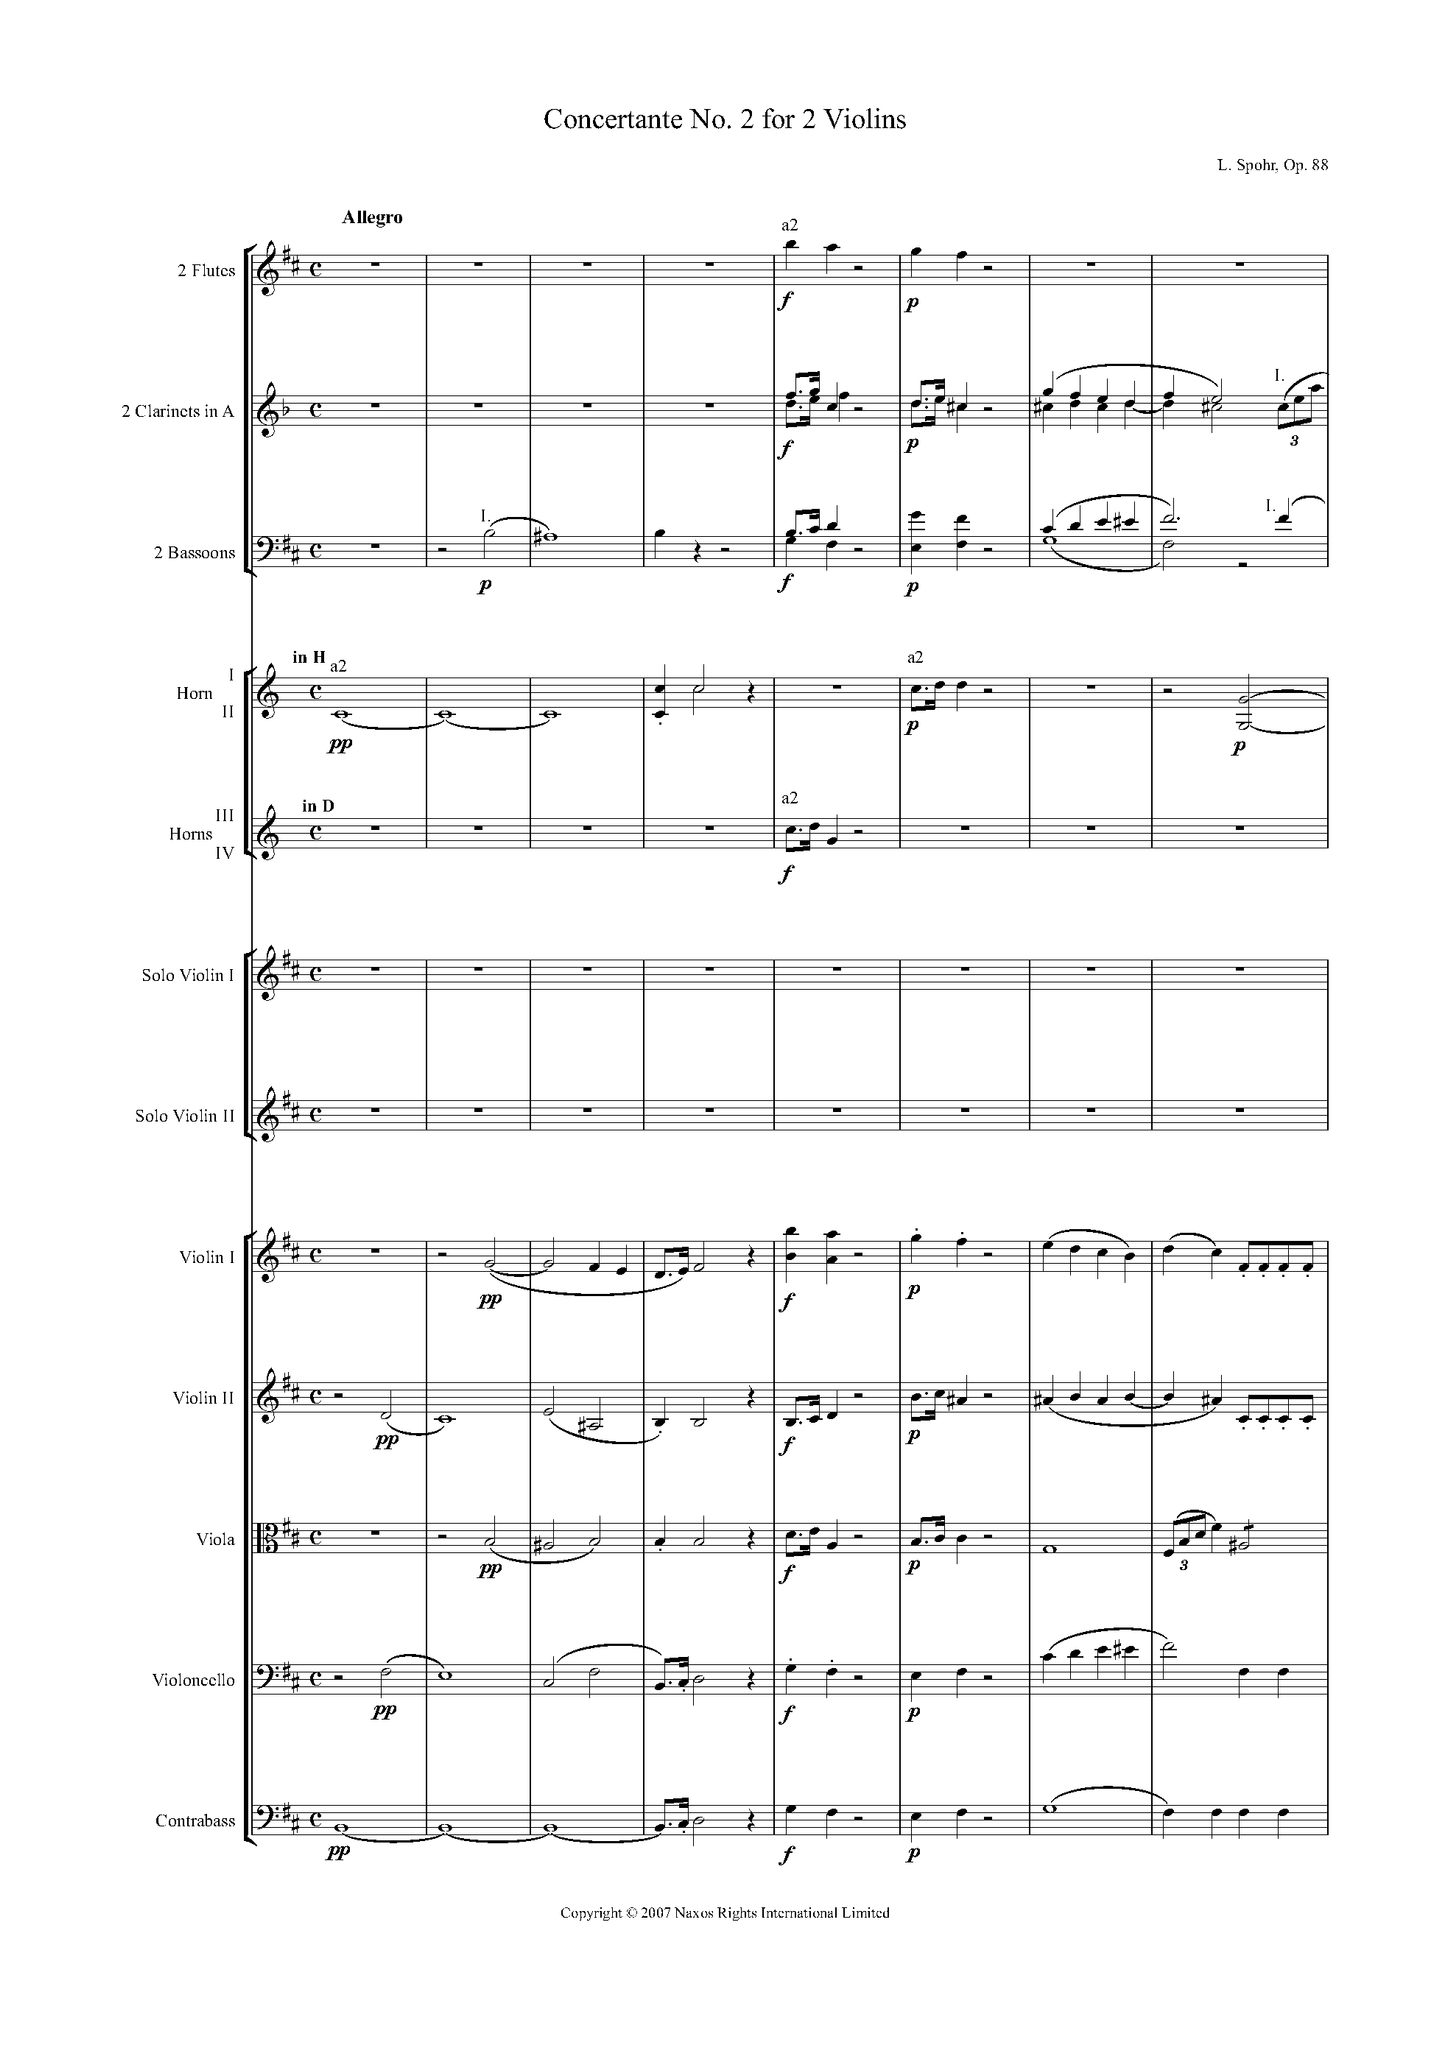 Louis Spohr: Concertante No. 2 in B Minor, Op. 88 – full score (NXP012)